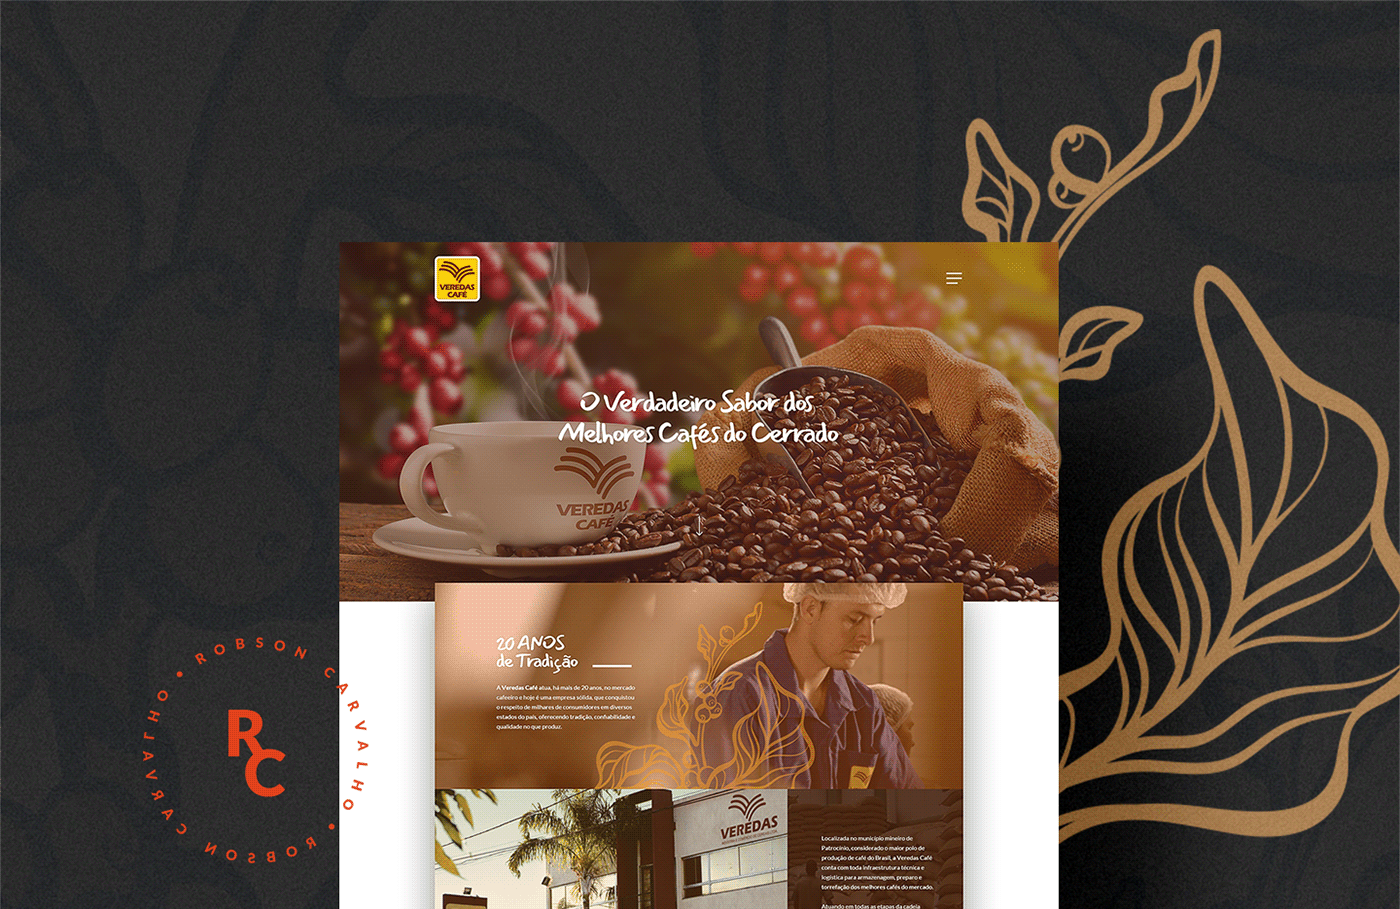 Webdesign Coffee cafe Website wordpress Golden Ratio industria